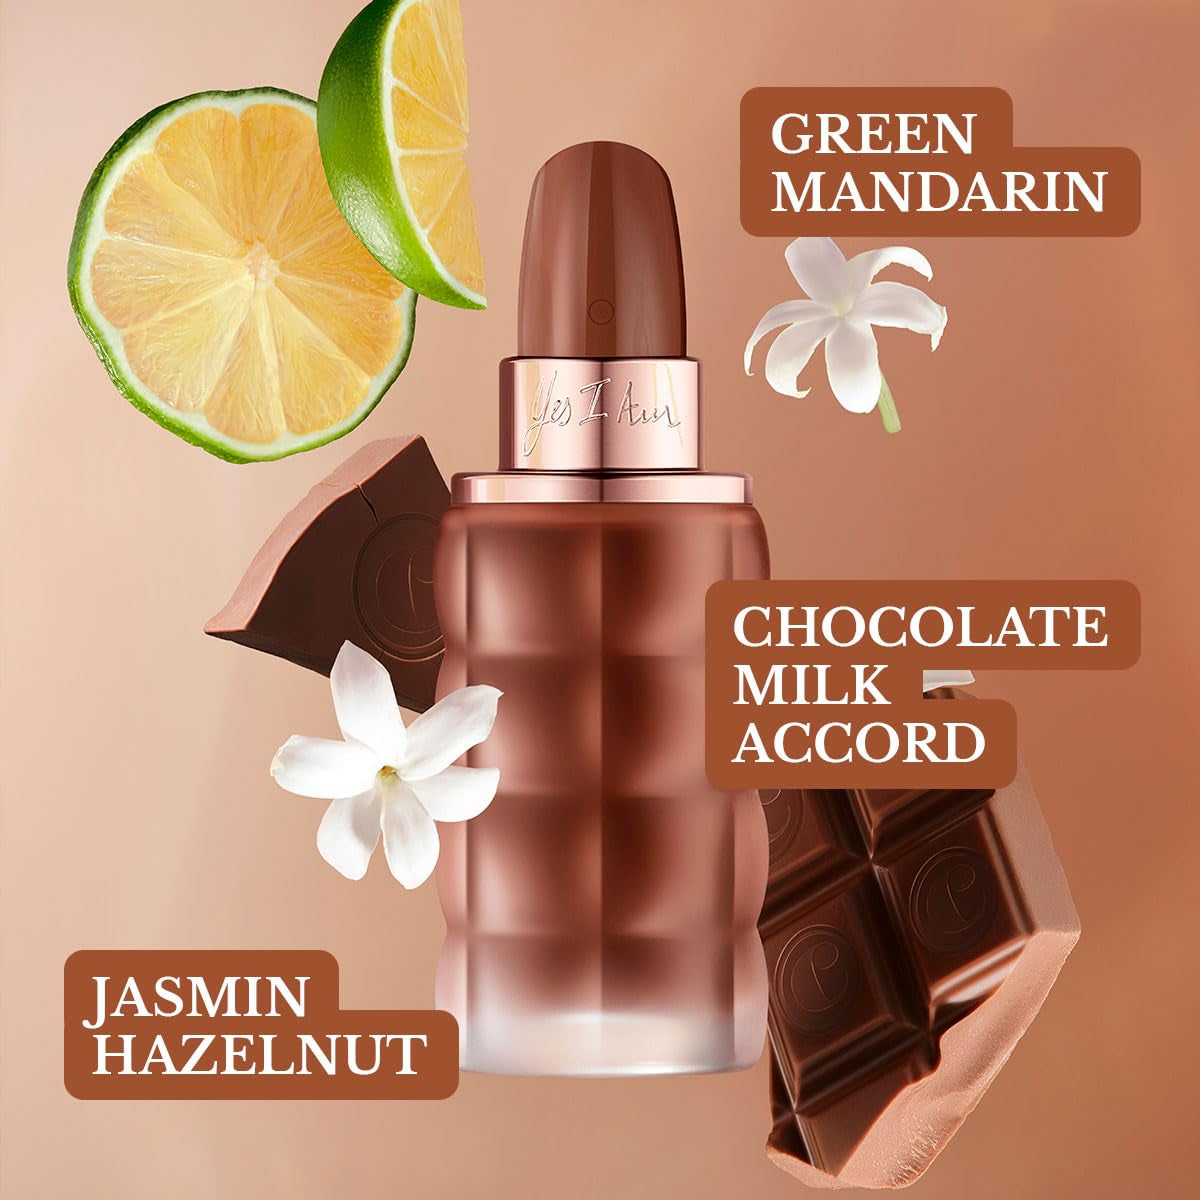 Cacharel Yes I Am Delicious Eau de Parfum Spray Perfume for Women - Green Mandarin, Jasmin Hazelnut & Chocolate Milk Accord Fragrance